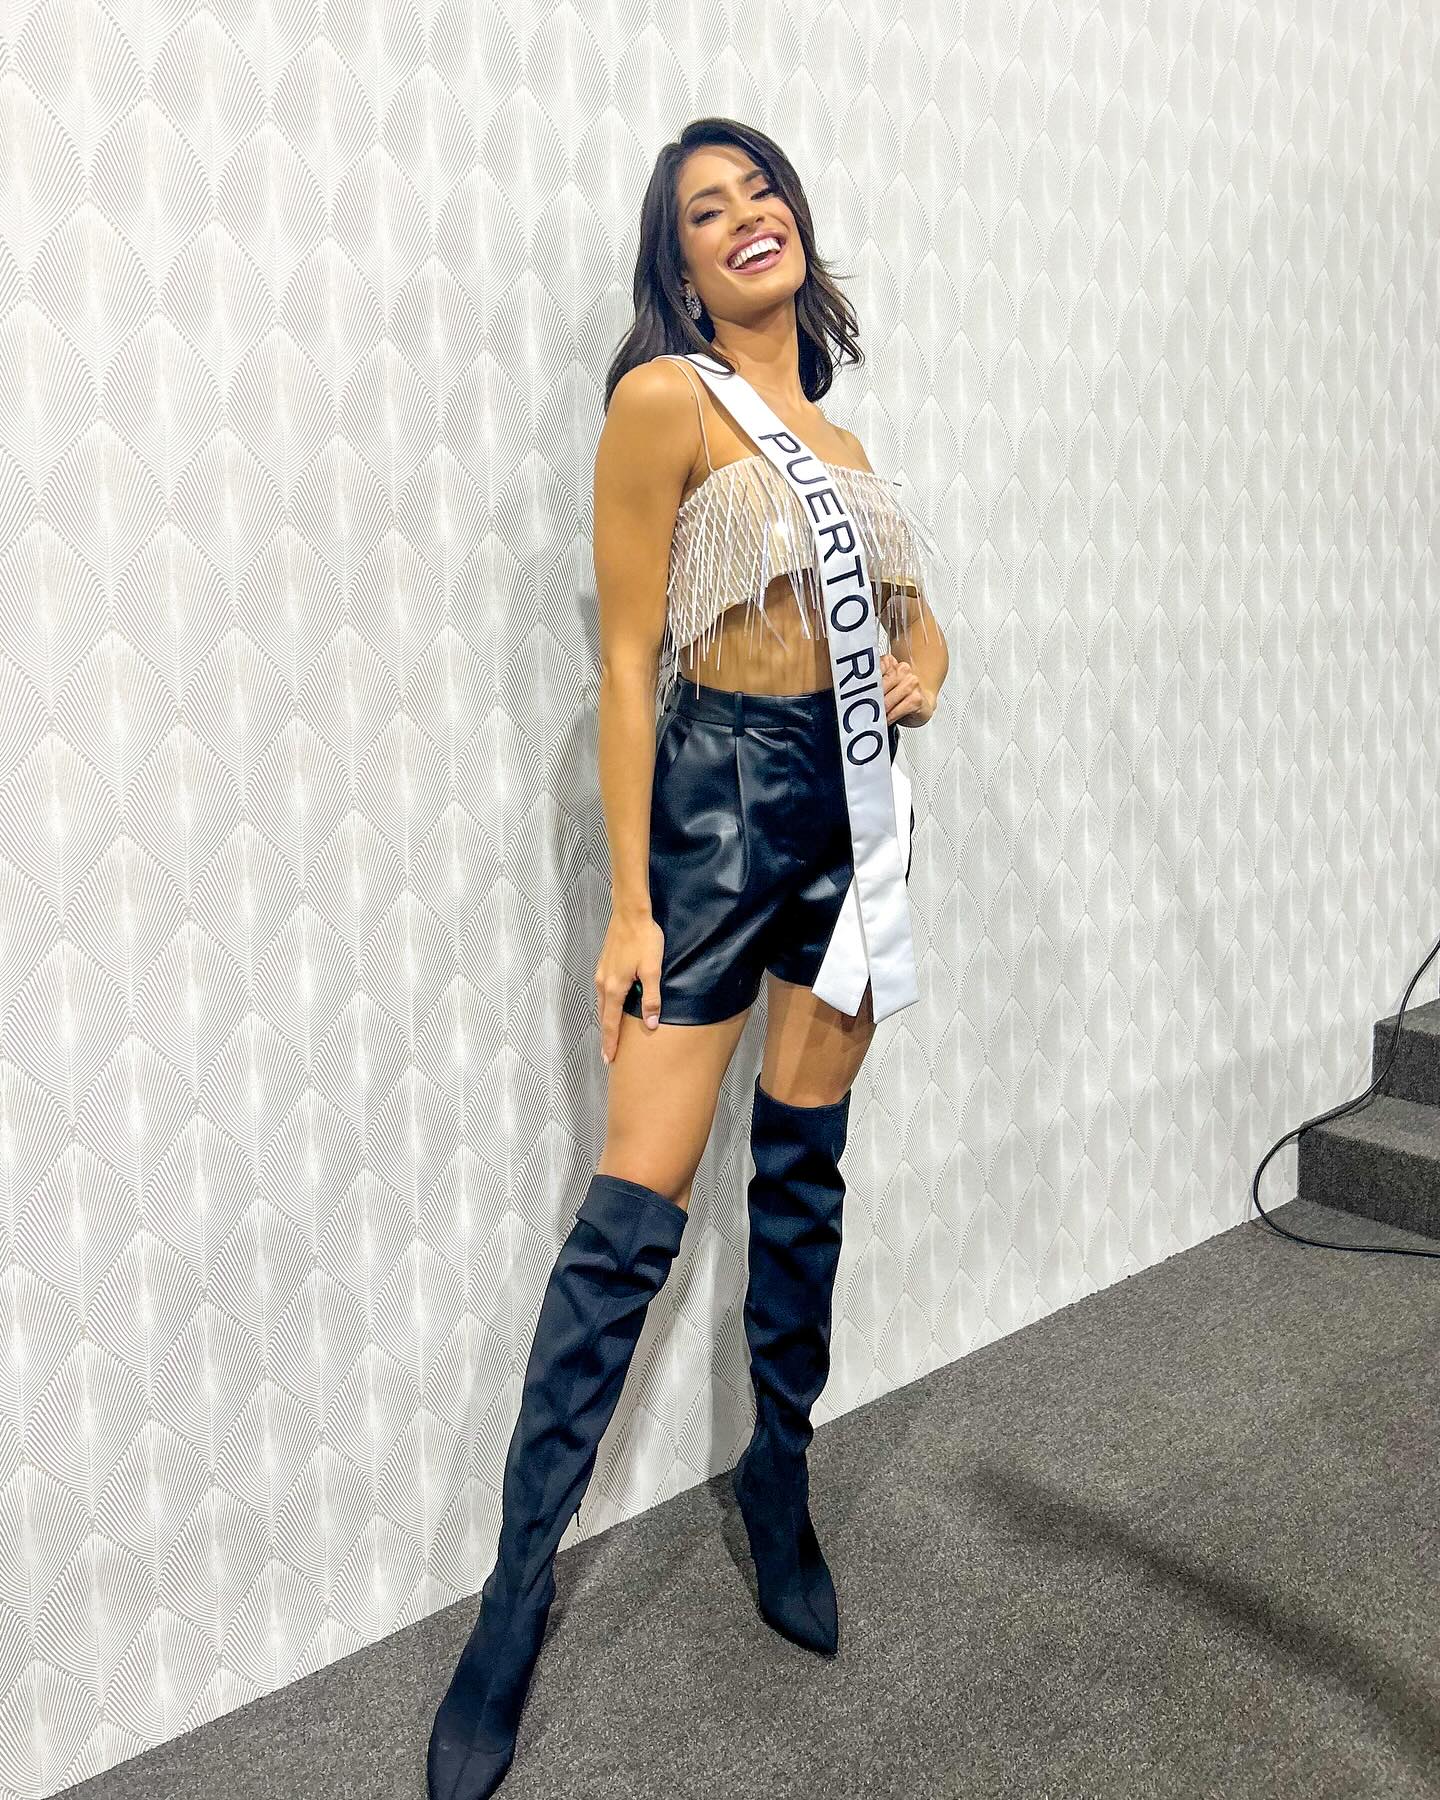 karla guilfu, top 5 de miss universe 2023/1st runner-up de miss supranational 2021. - Página 21 43182310